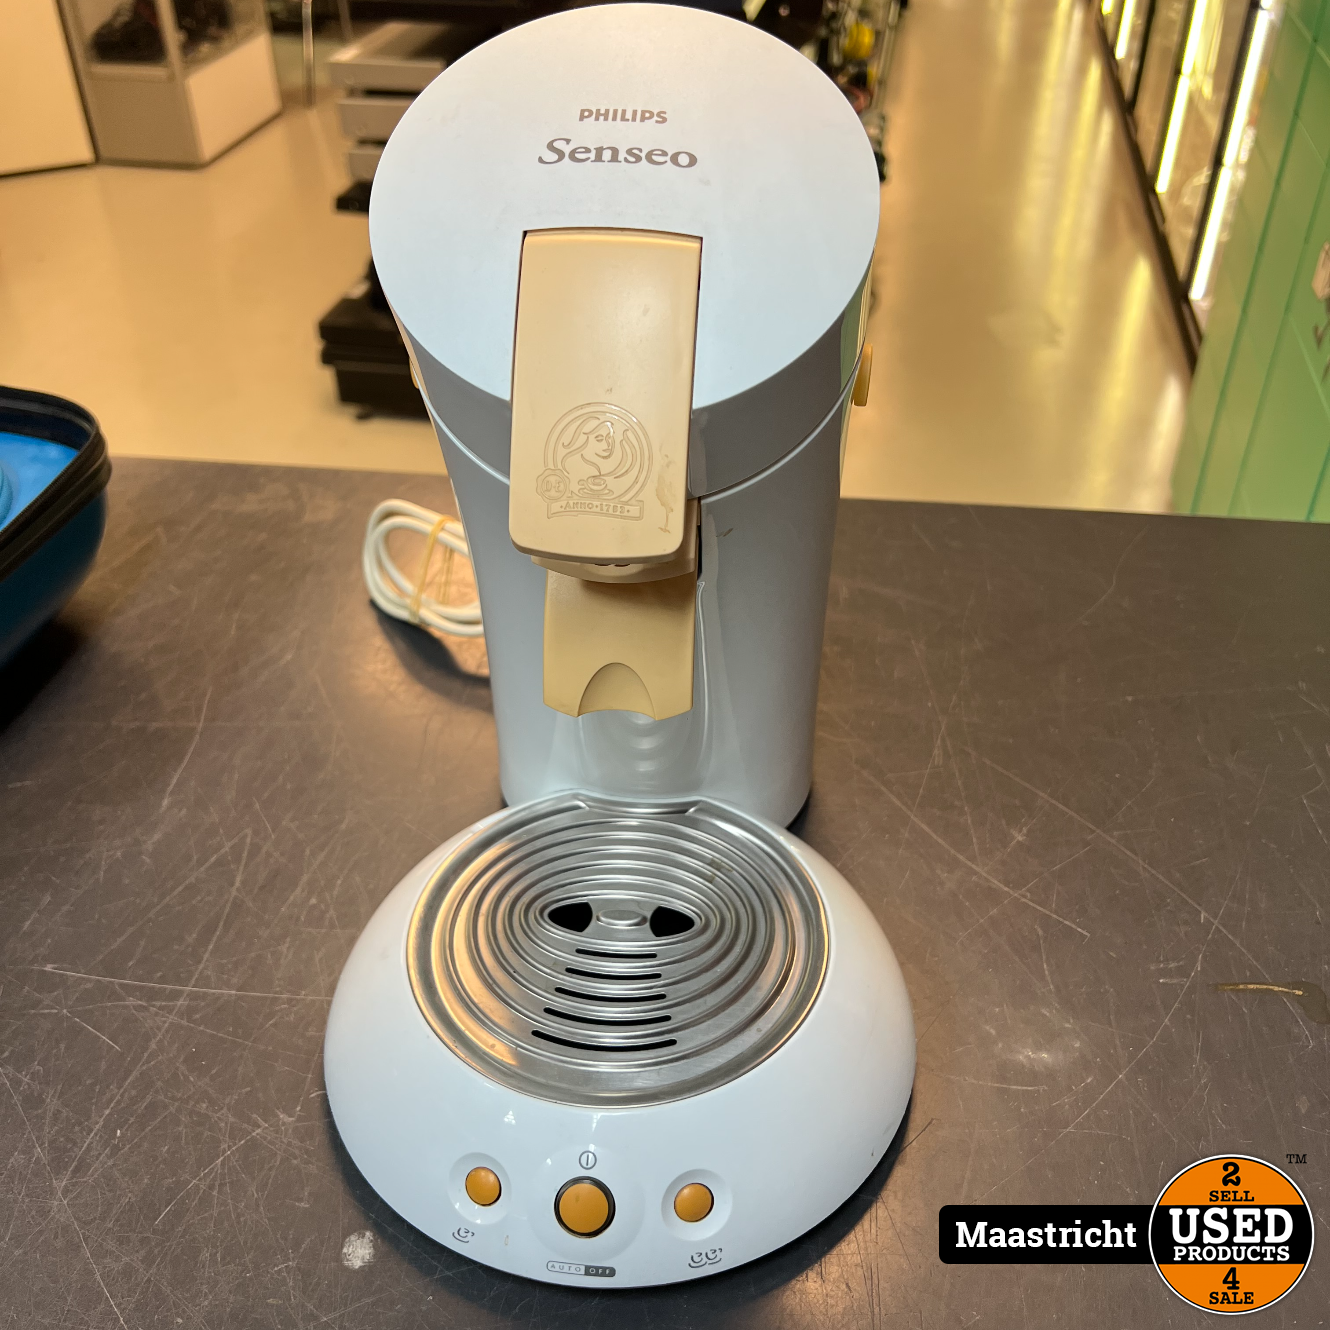 Philips Senseo koffieapparaat - Products Maastricht